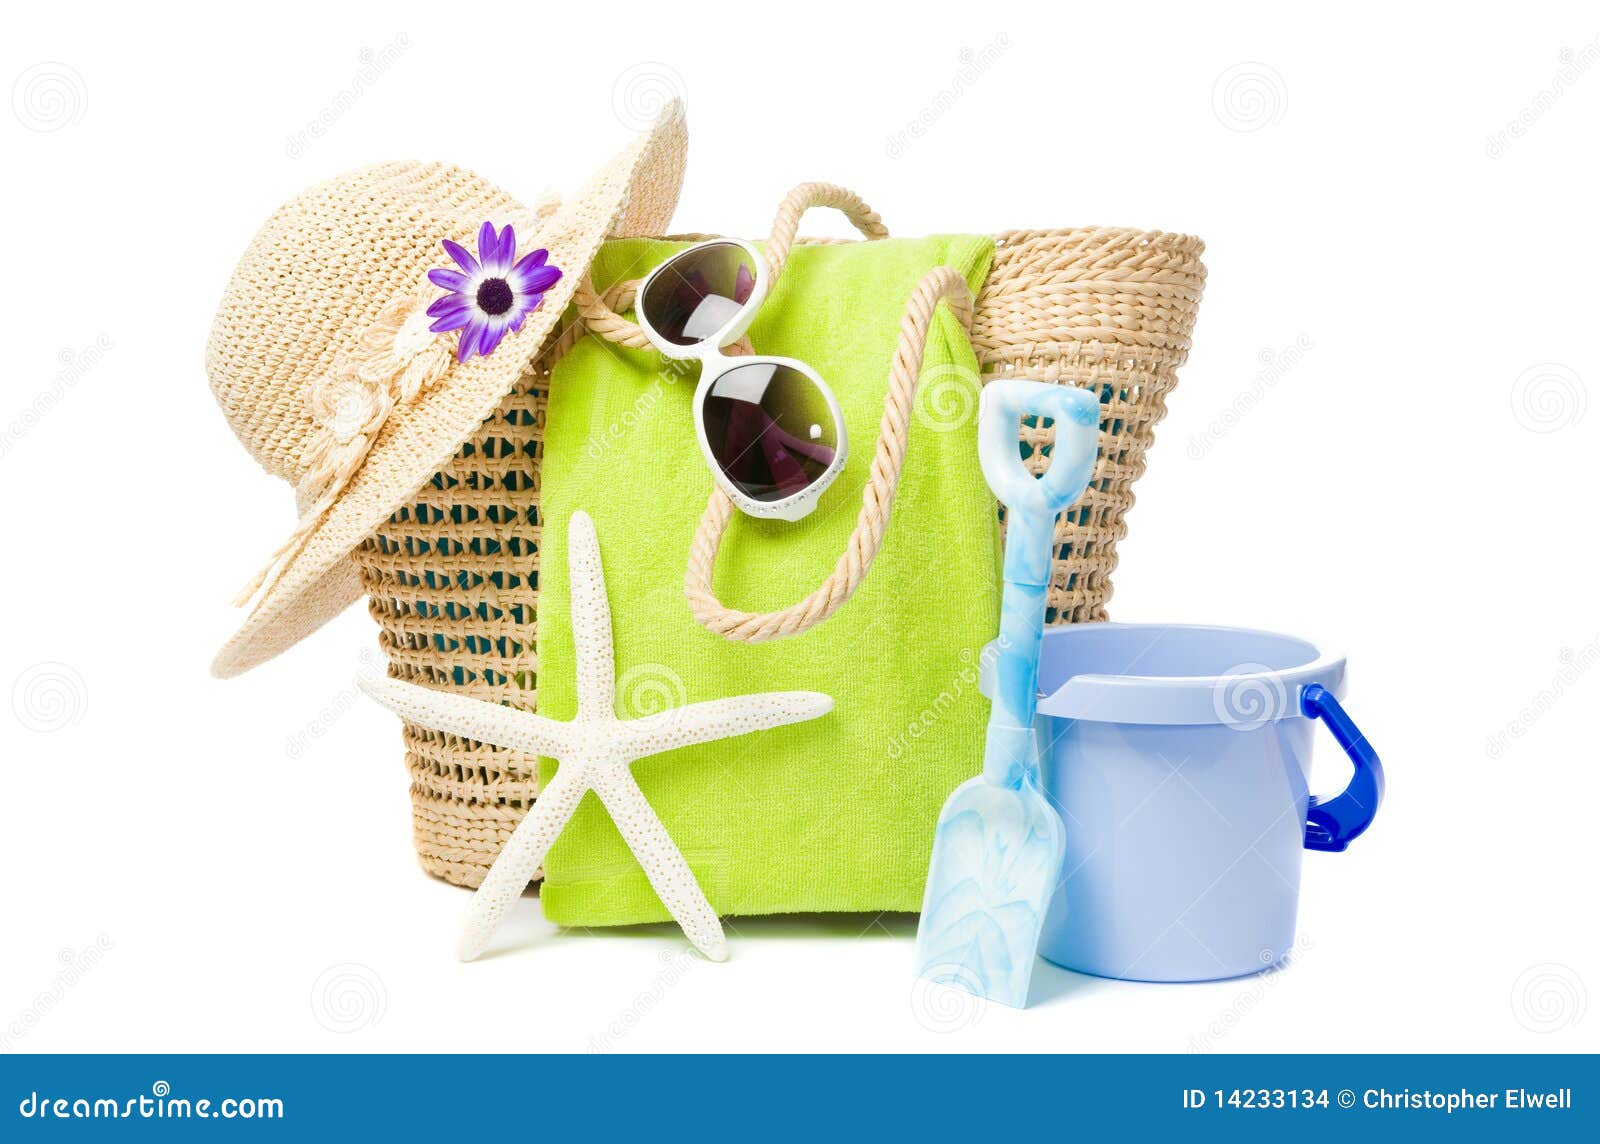 Beach Items stock photo. Image of flower, straw, summer - 14233134